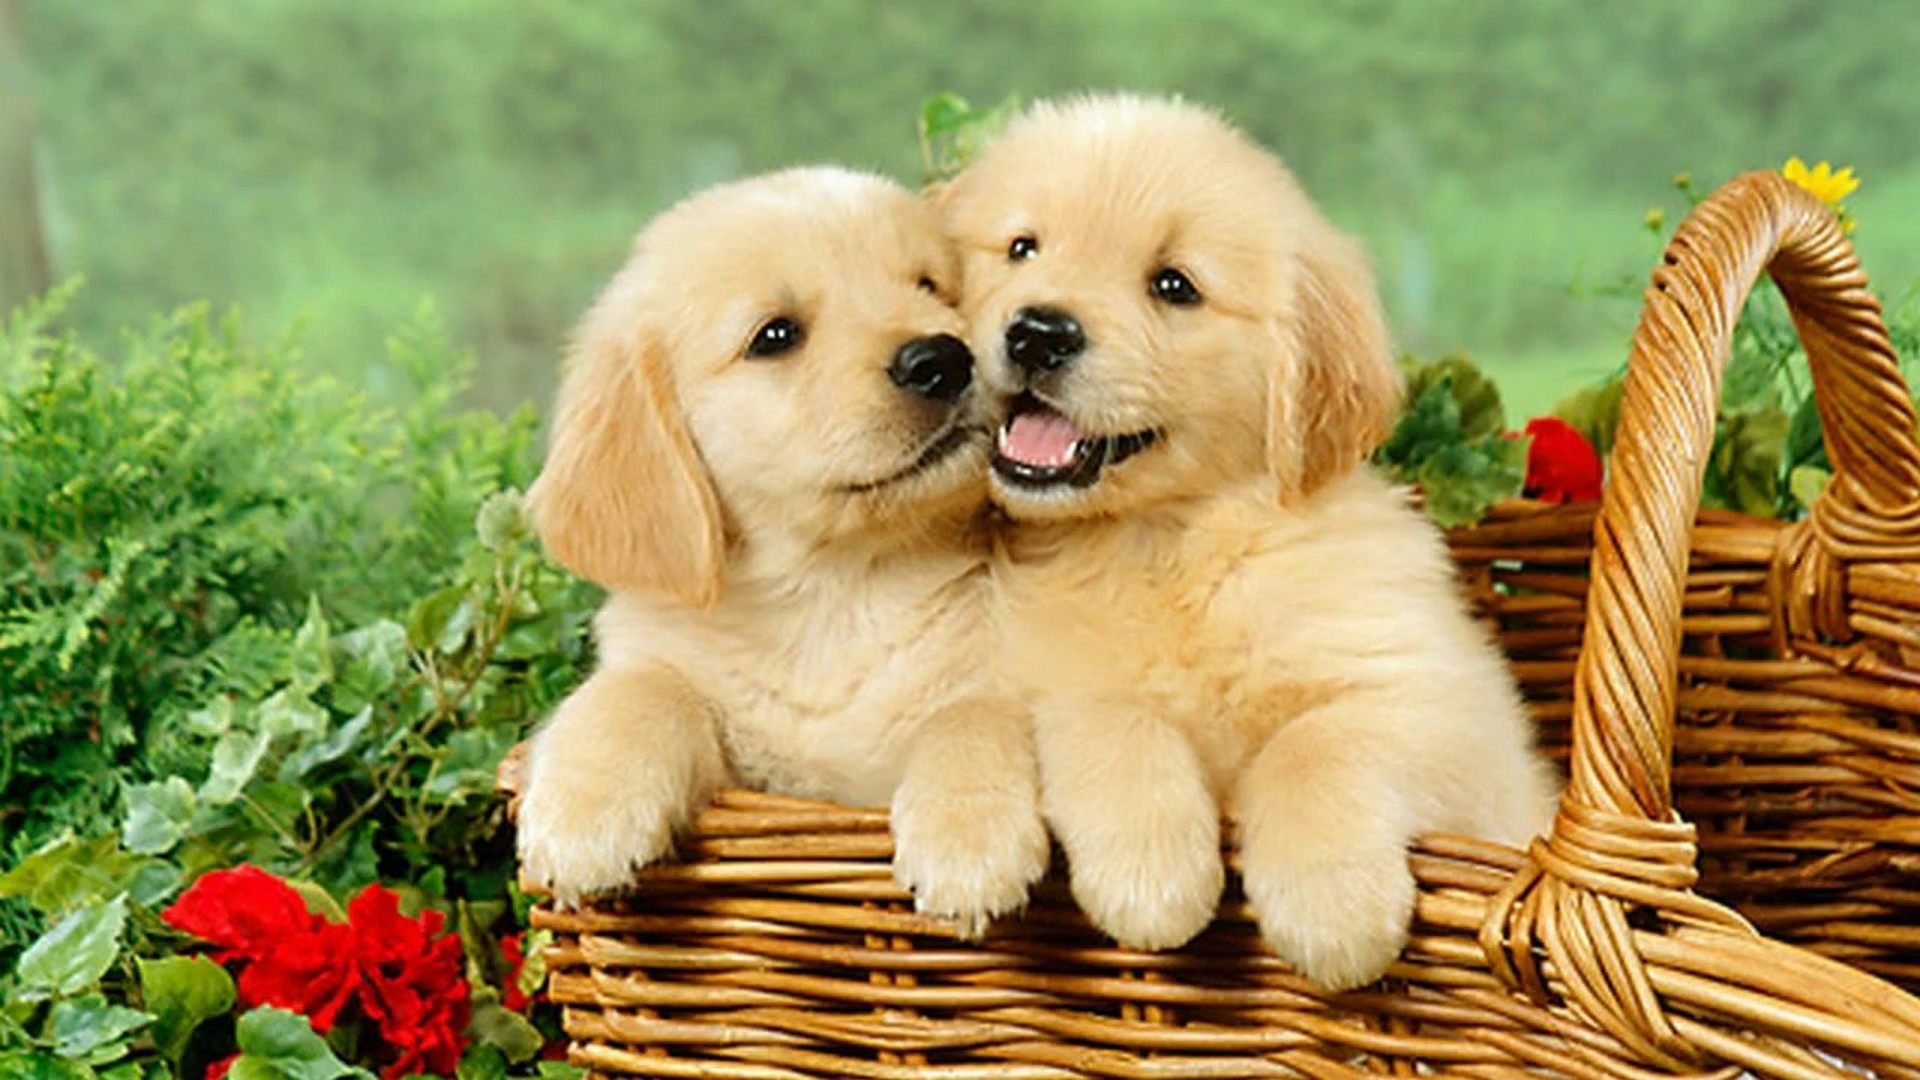 Cute Puppies Desktop Backgrounds HD 1920x1080